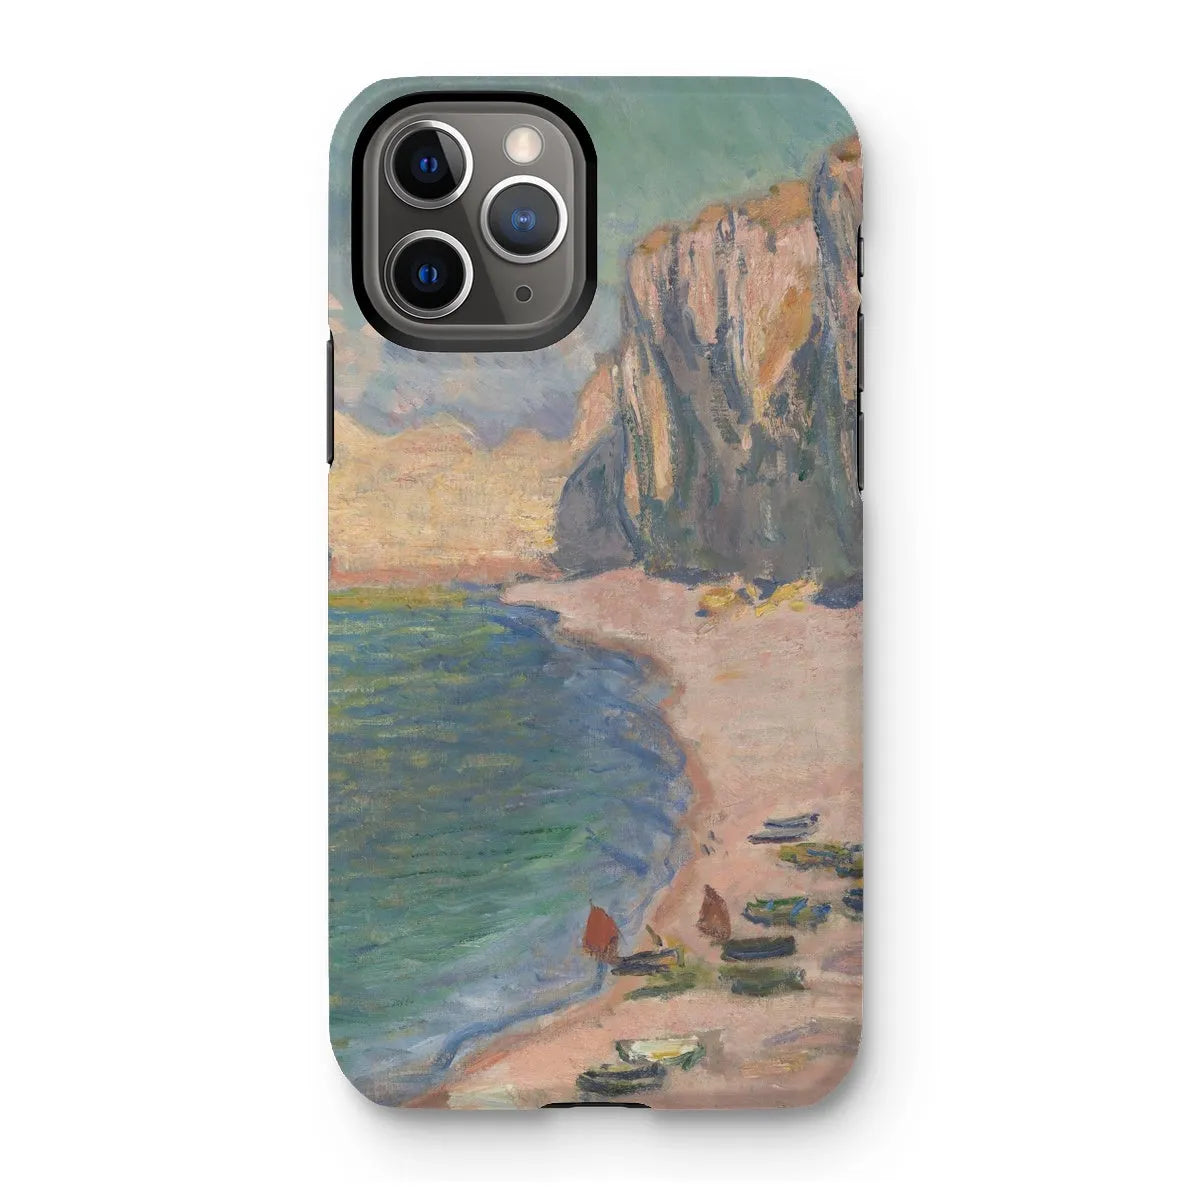 étretat - Impressionist Art Phone Case - Claude Monet - Iphone 11 Pro / Matte - Mobile Phone Cases - Aesthetic Art